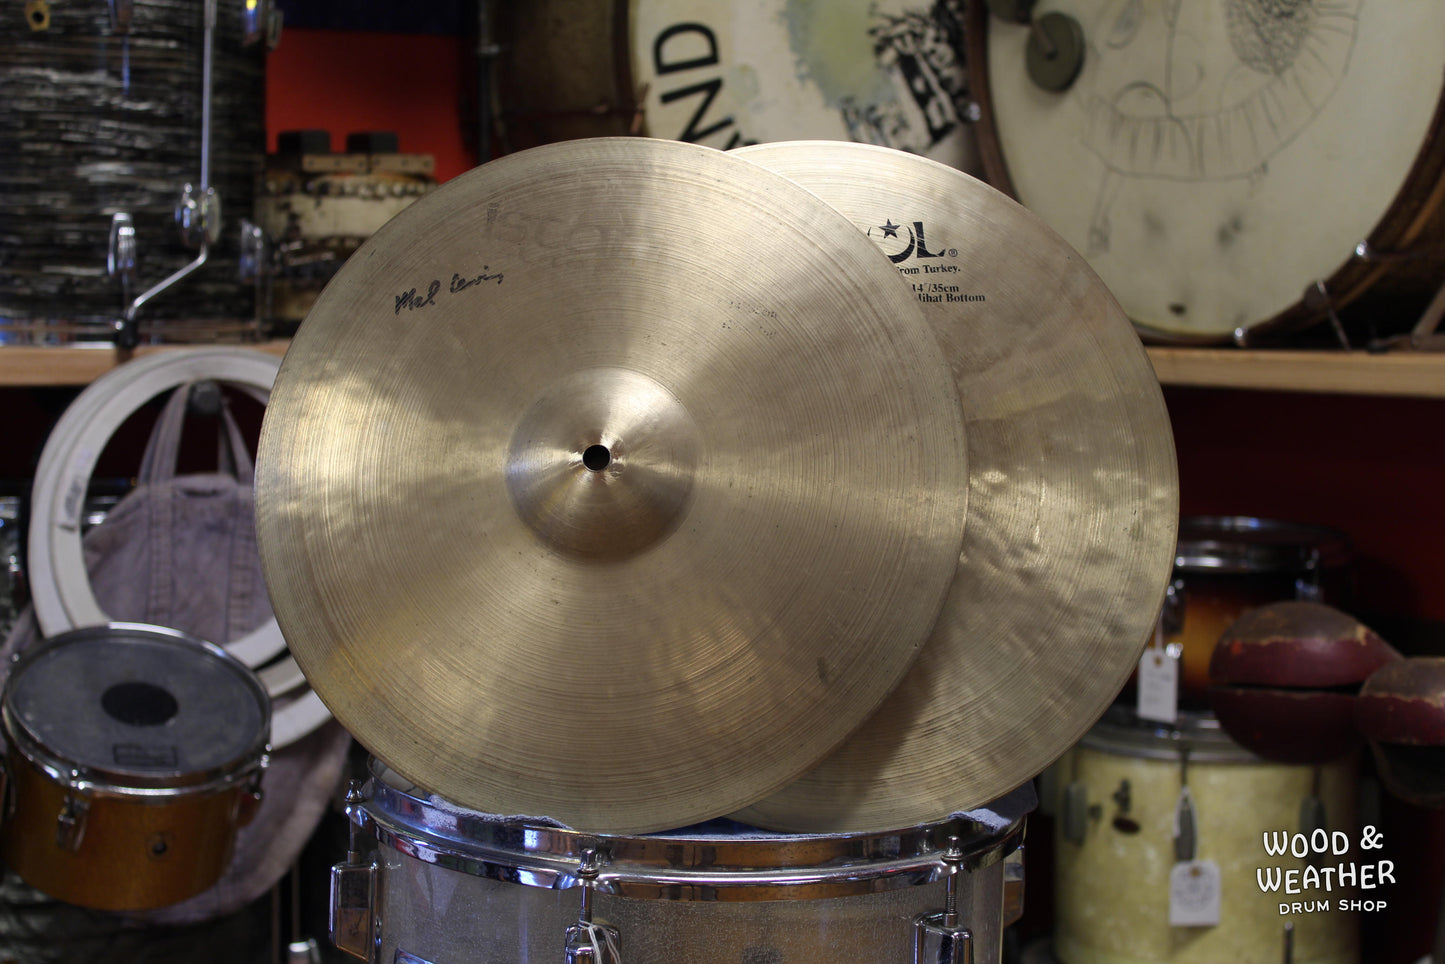 Used Istanbul Agop 14" Mel Lewis Hi-Hat Cymbals 844/1025g